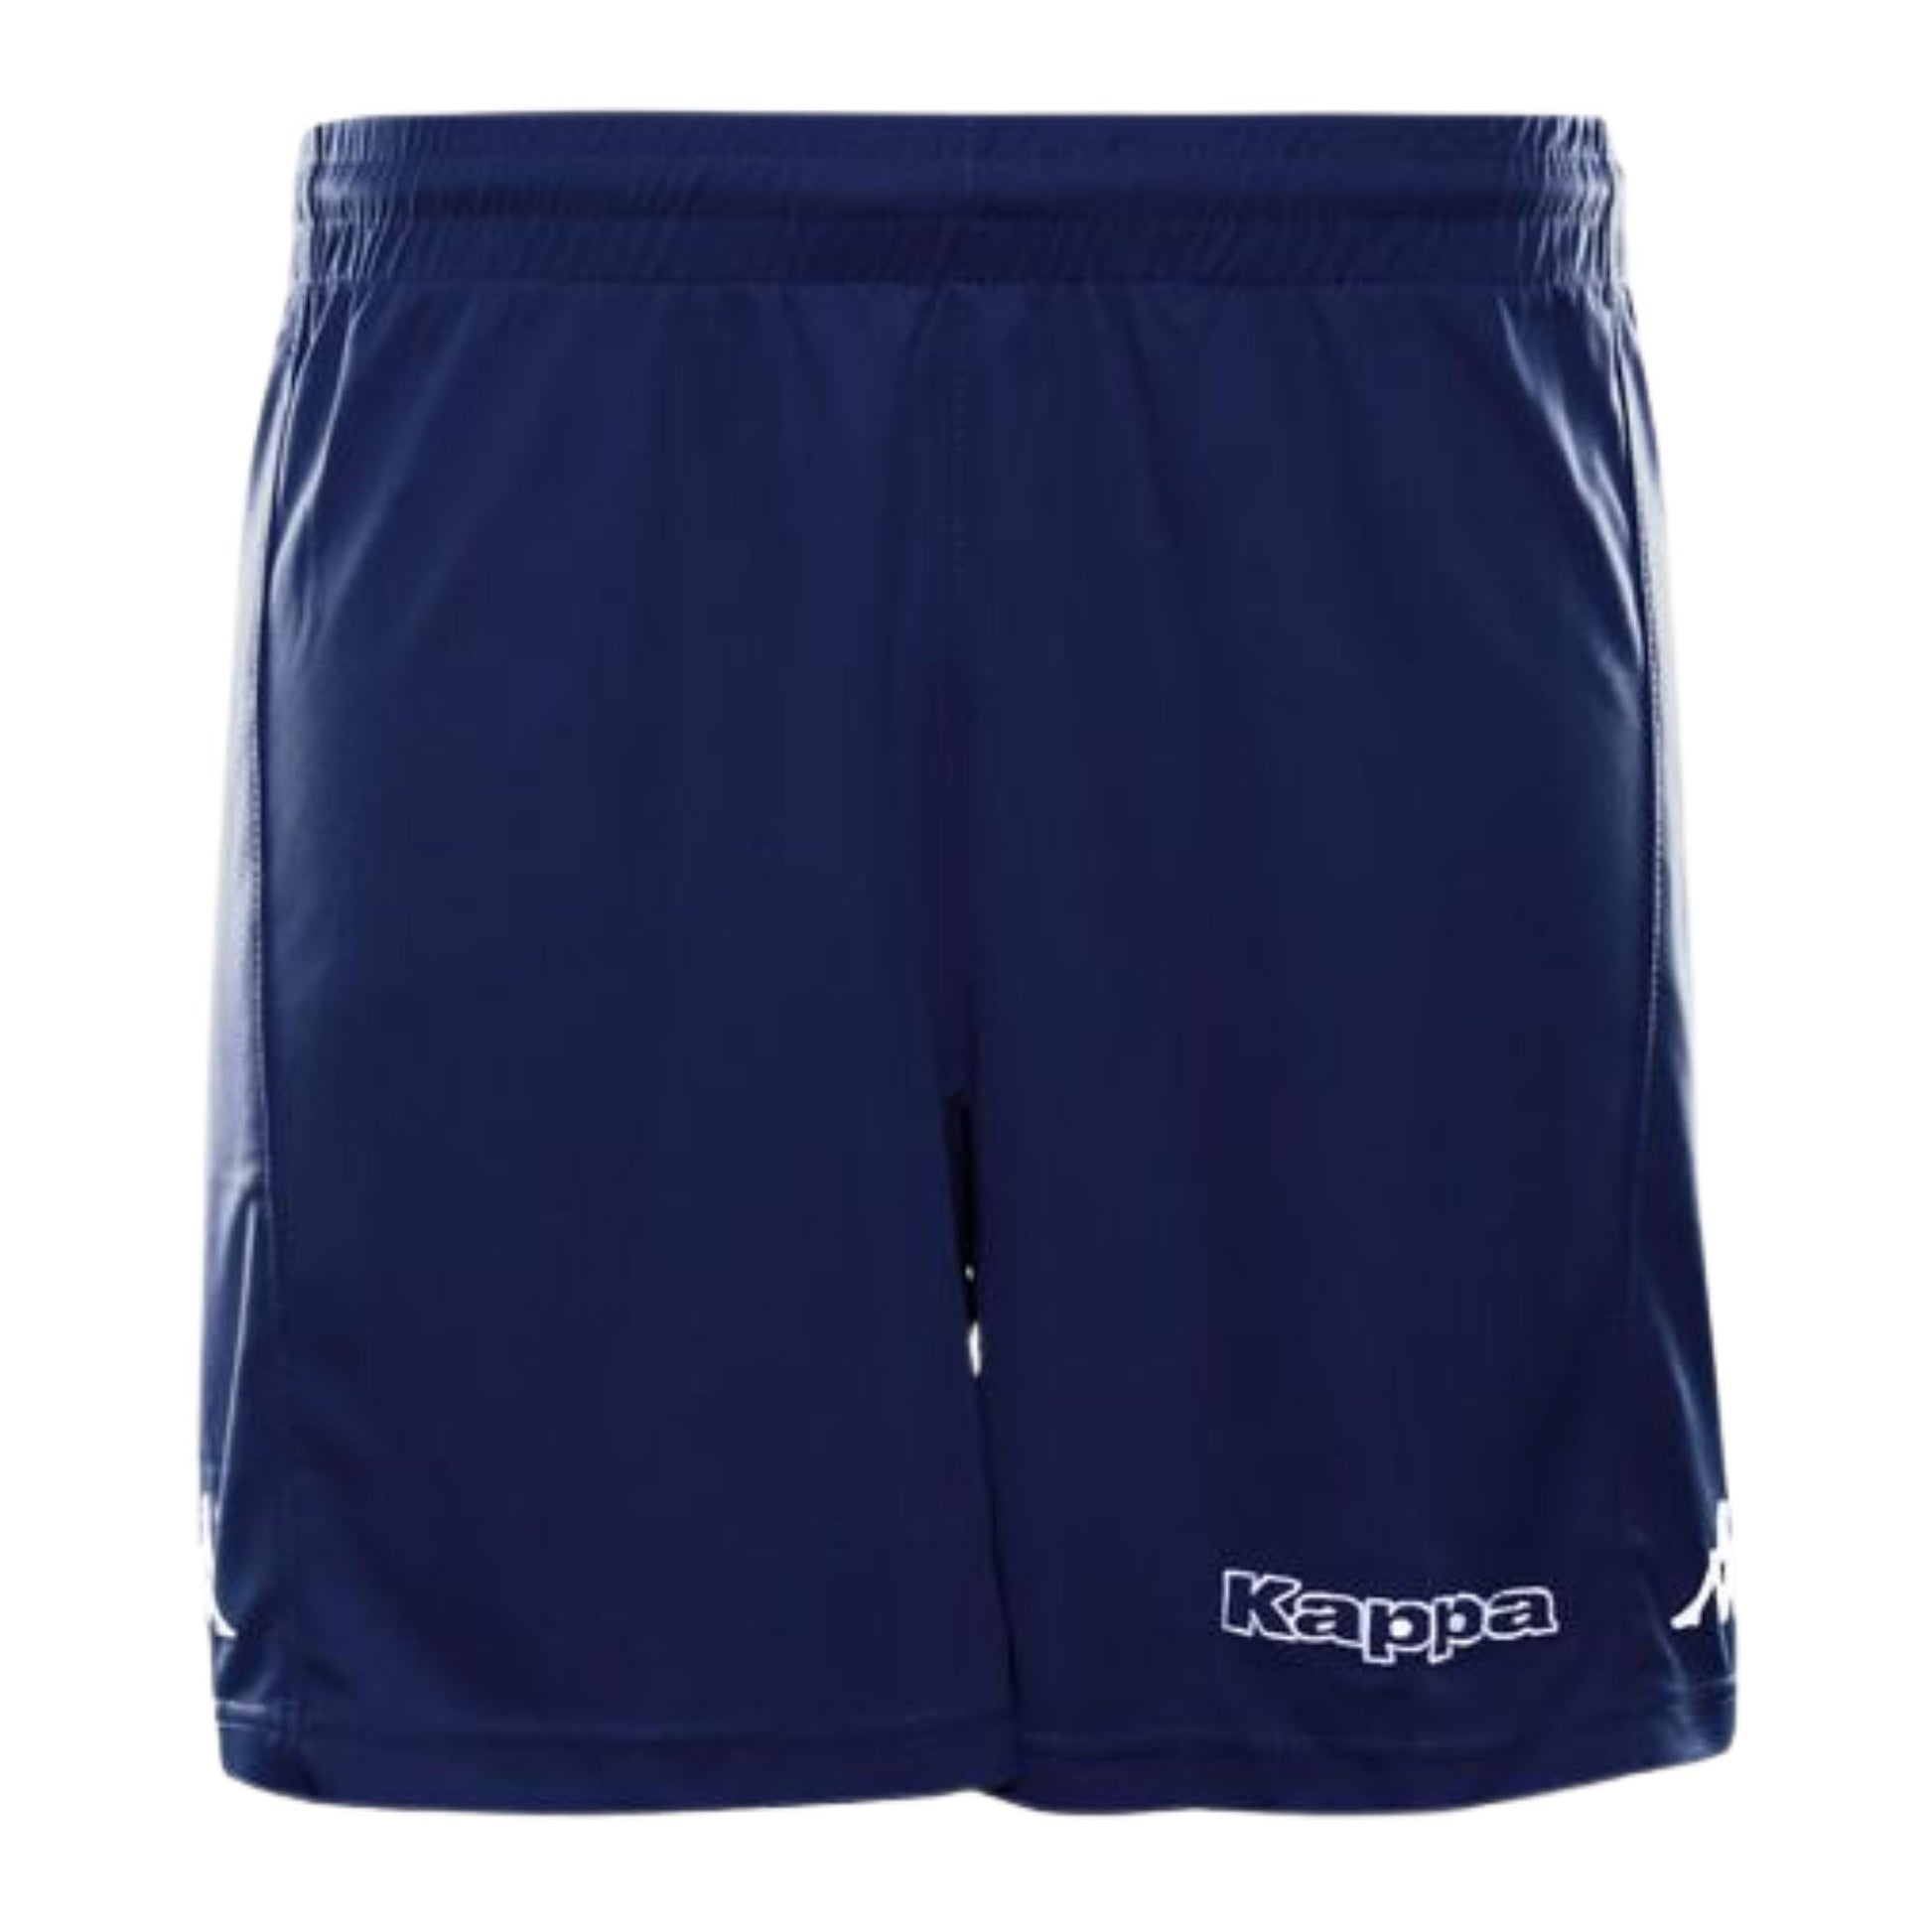 Kappa Unisex Shorts Shorts KAPPA XS NAVY 